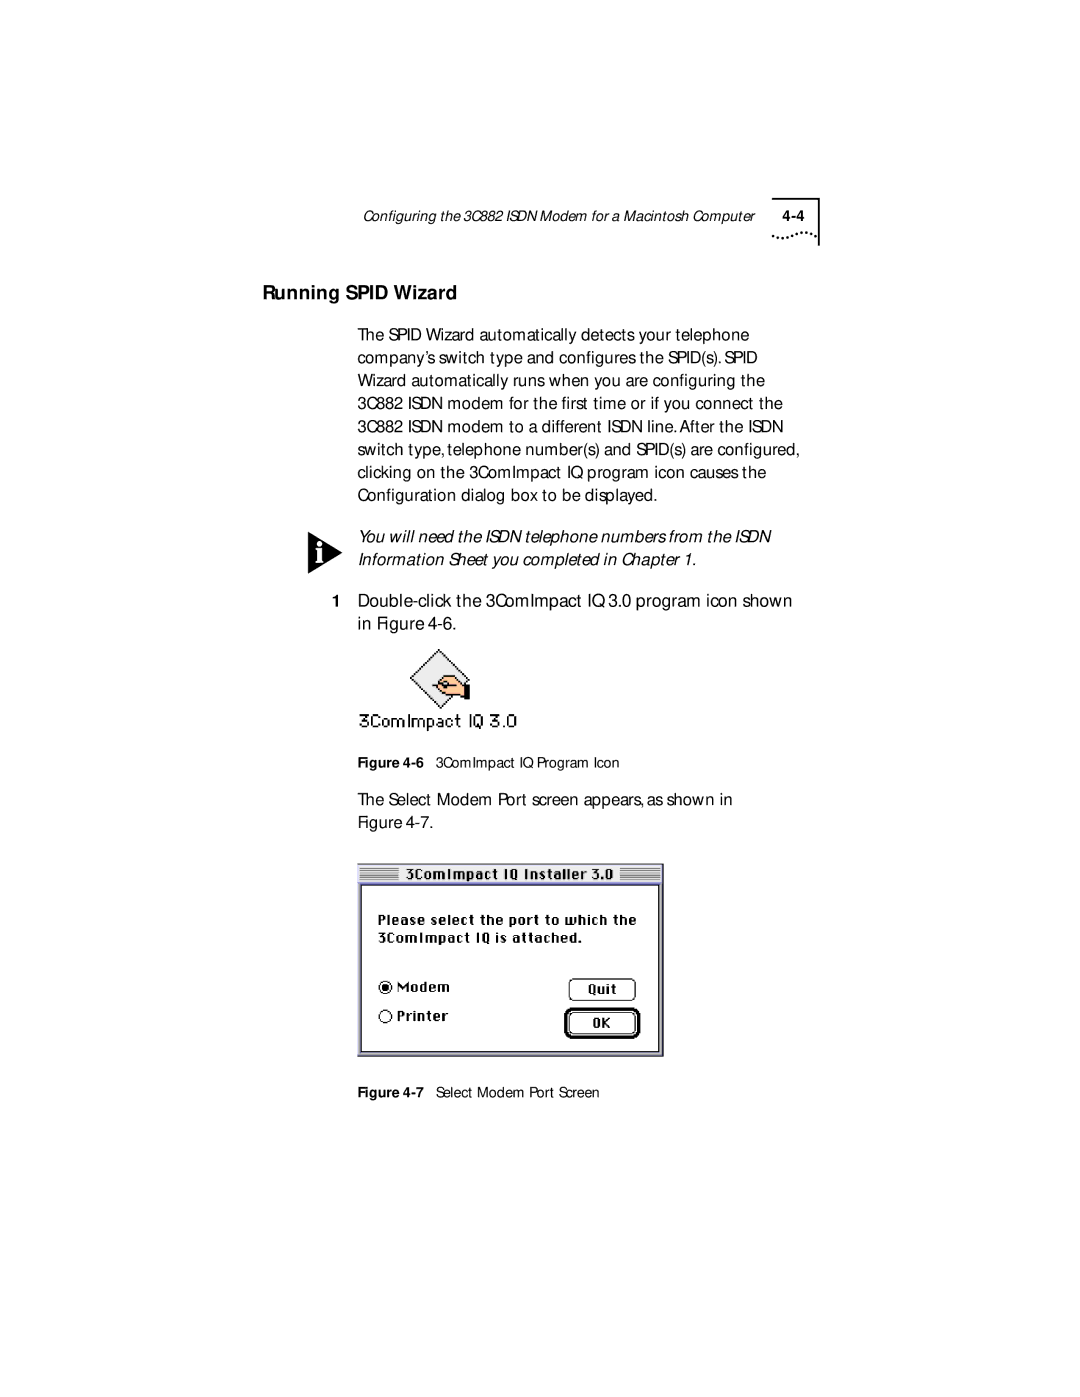 3Com 3C882 manual 3ComImpact IQ Program Icon, Select Modem Port Screen 